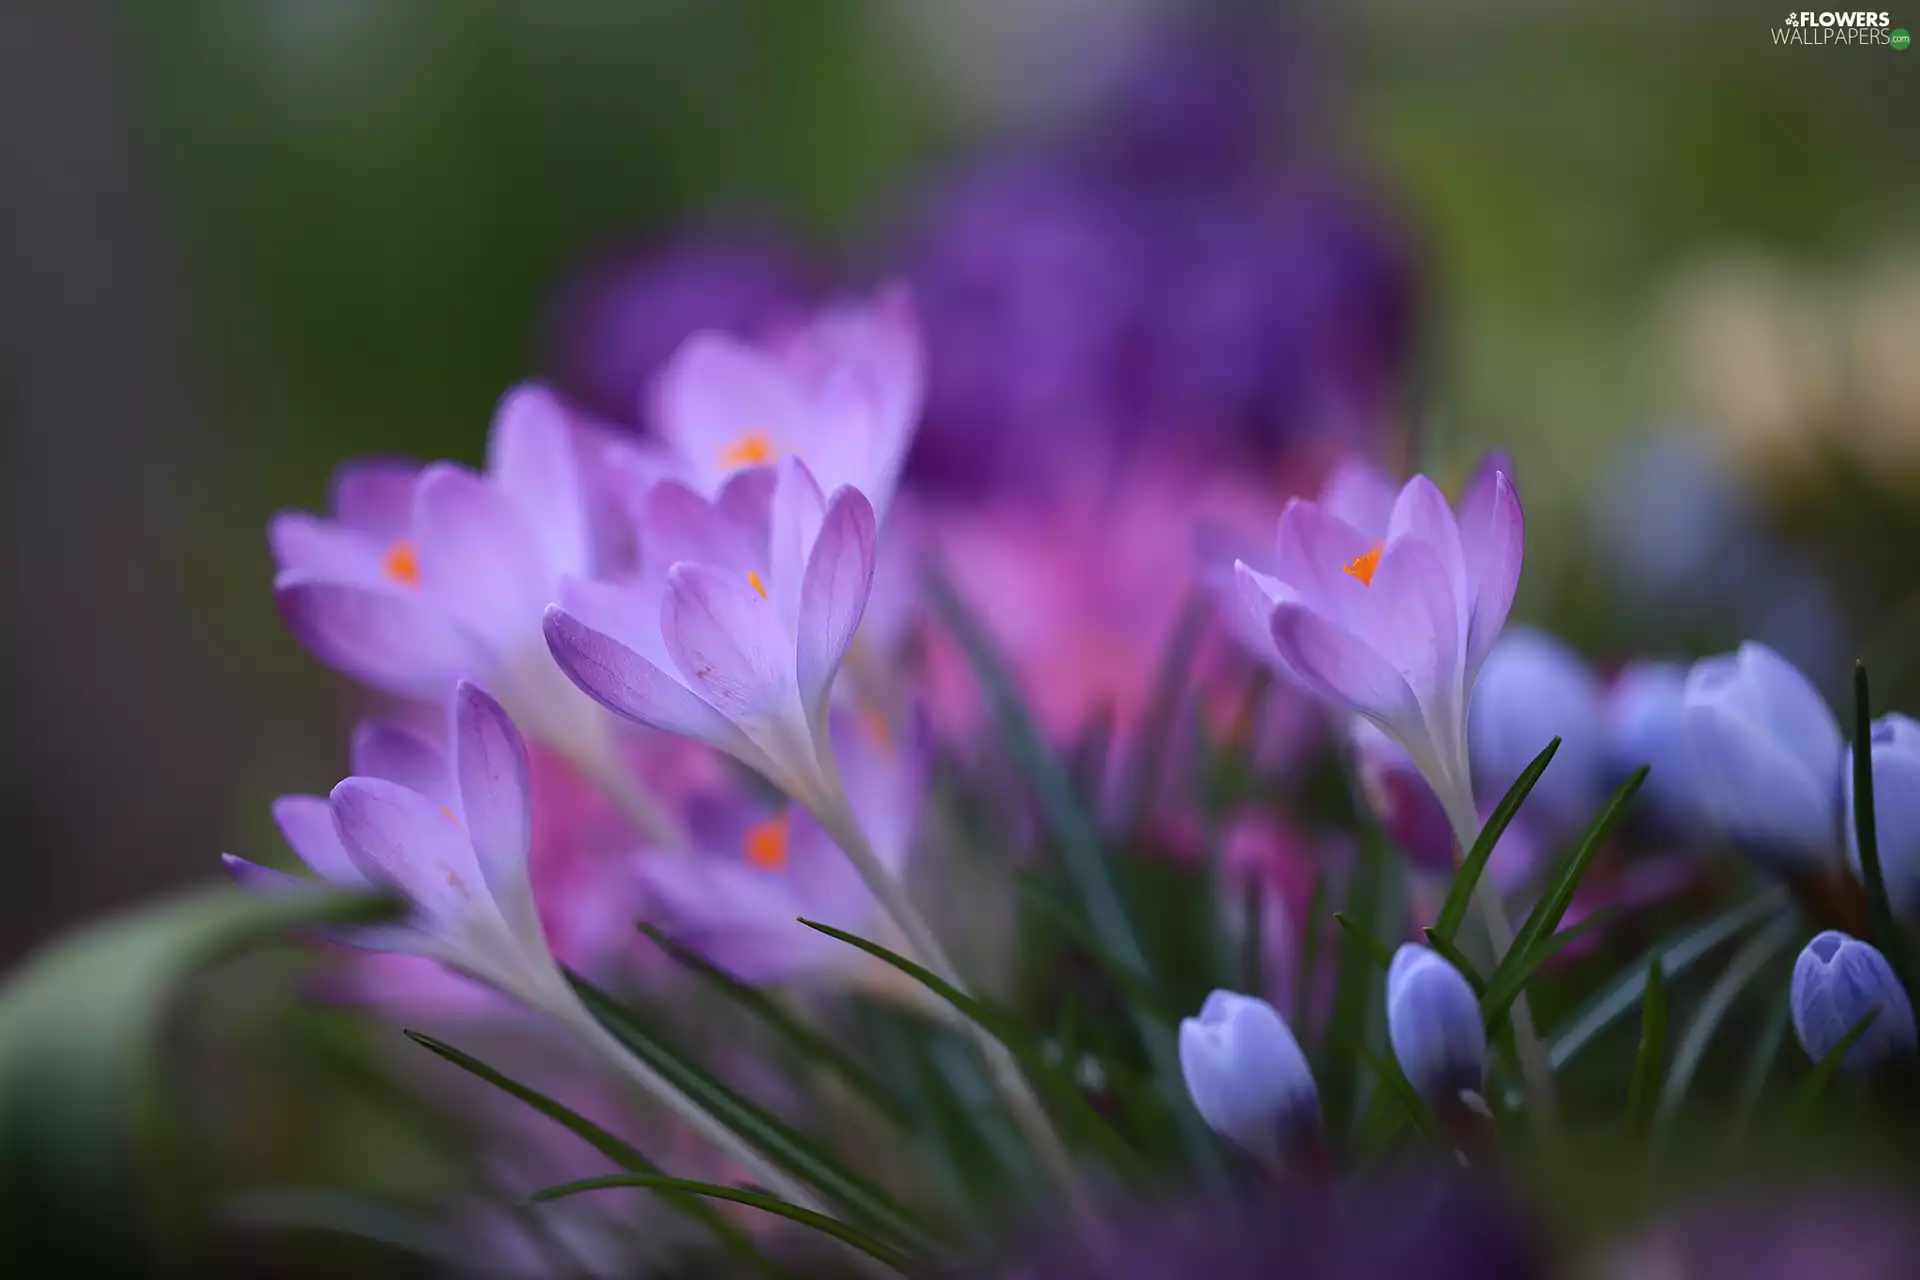 lilac, Flowers, Spring, crocuses